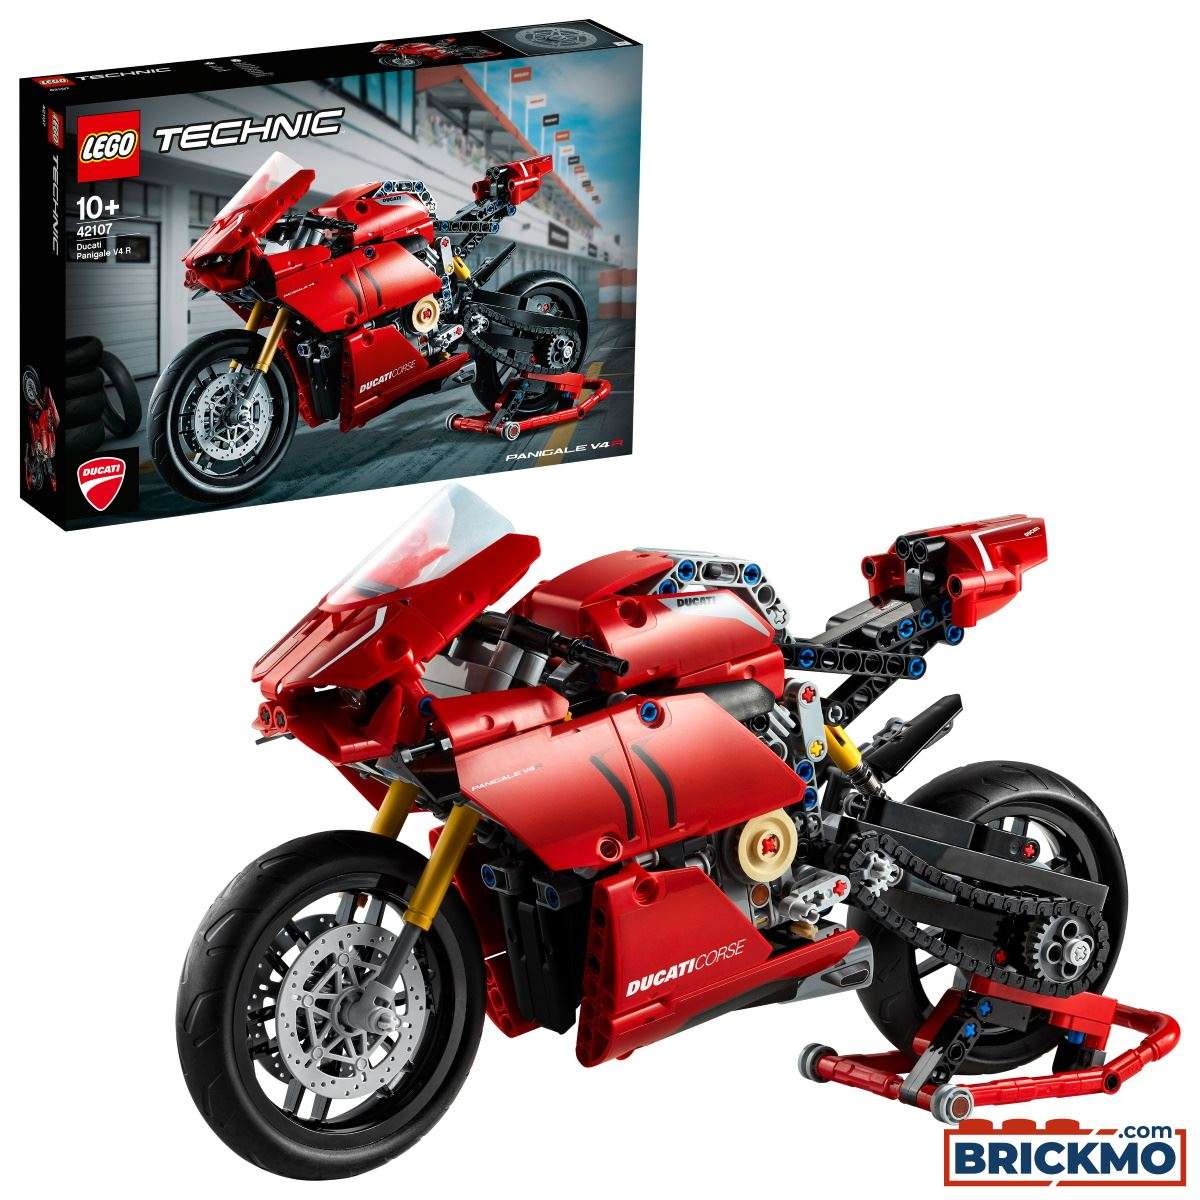 LEGO Technic Motorrad Ducati Panigale V4 R 42107